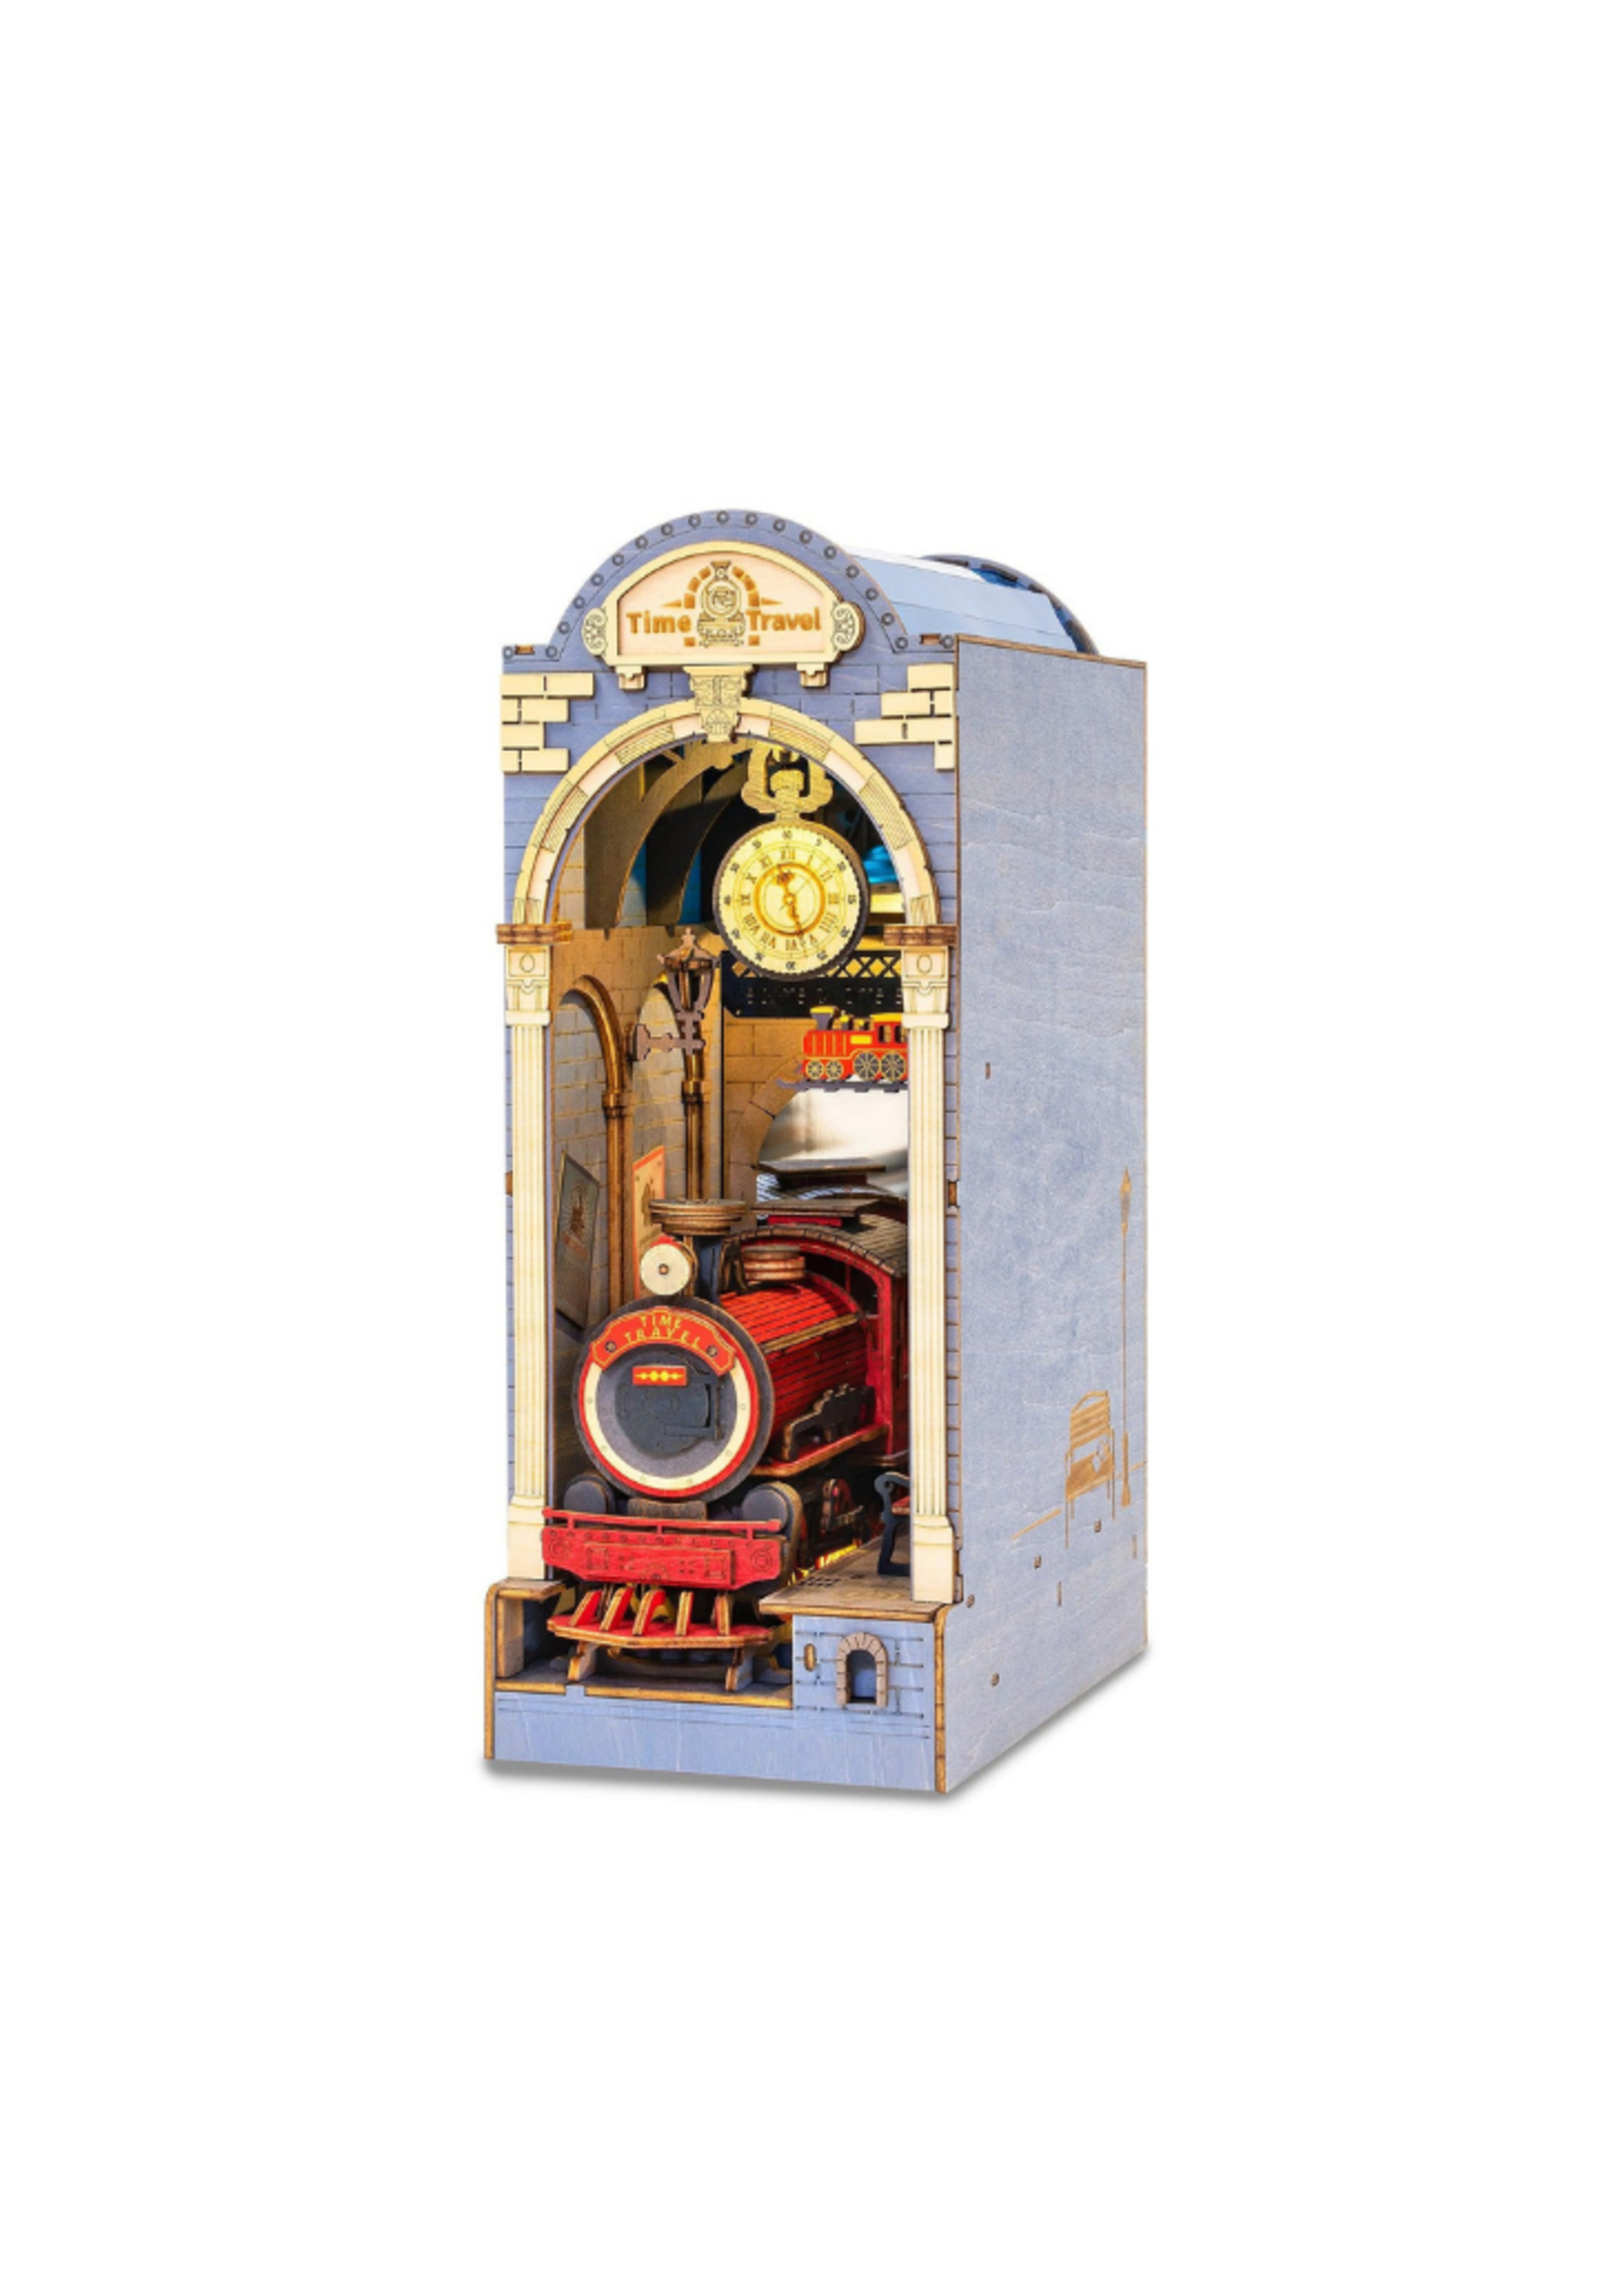 Hands Craft DIY Miniature House Book Nook Kit: Time Travel